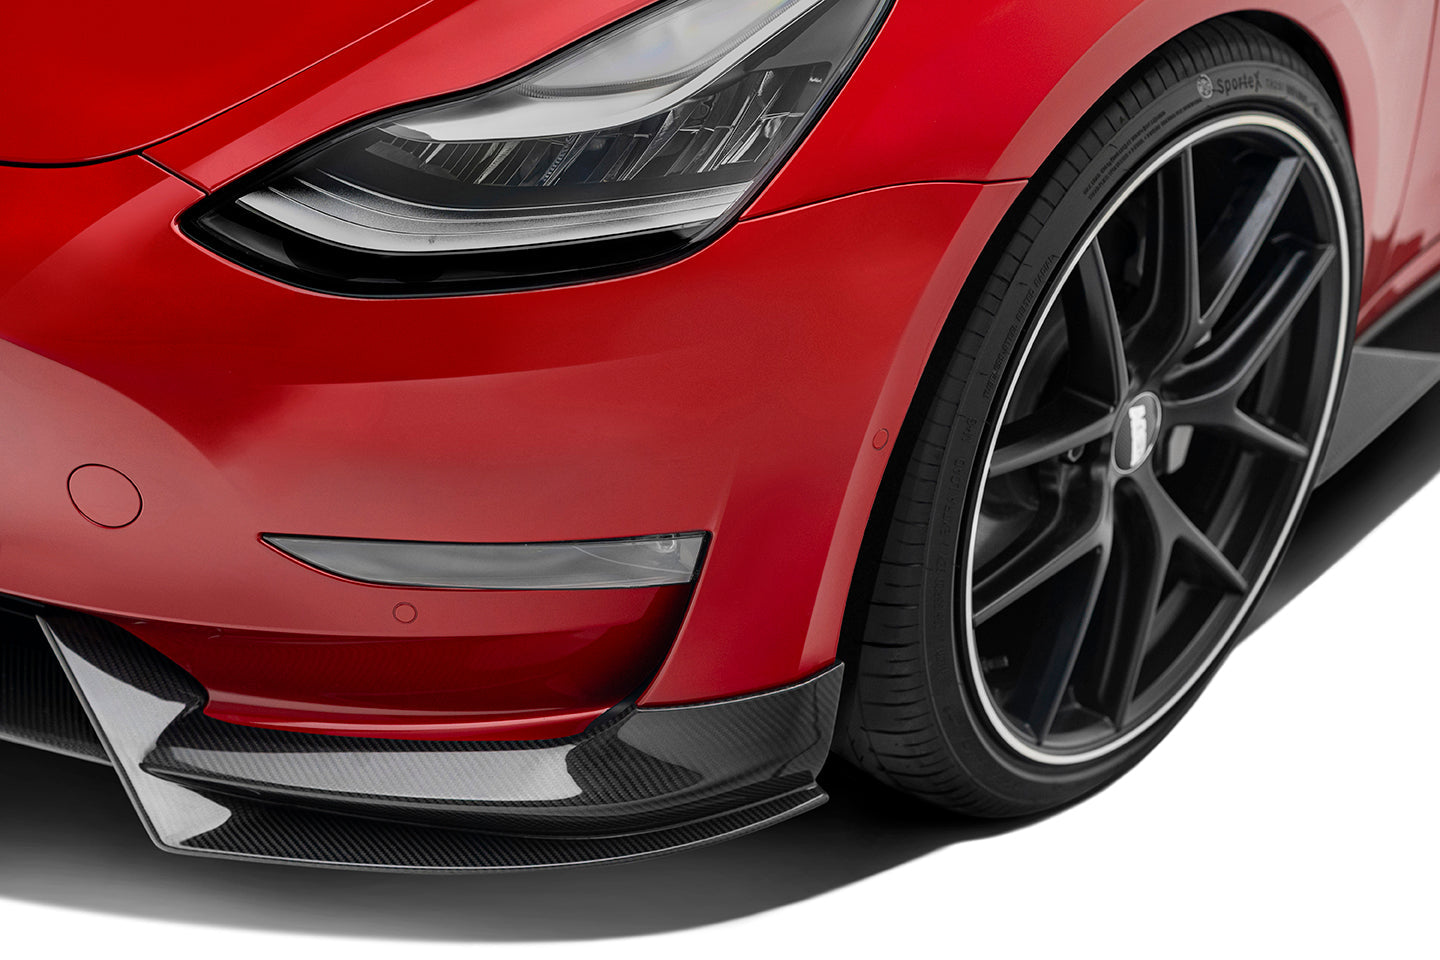 Adro Tesla Model 3 Premium Prepeg Carbon Fiber Front Lip